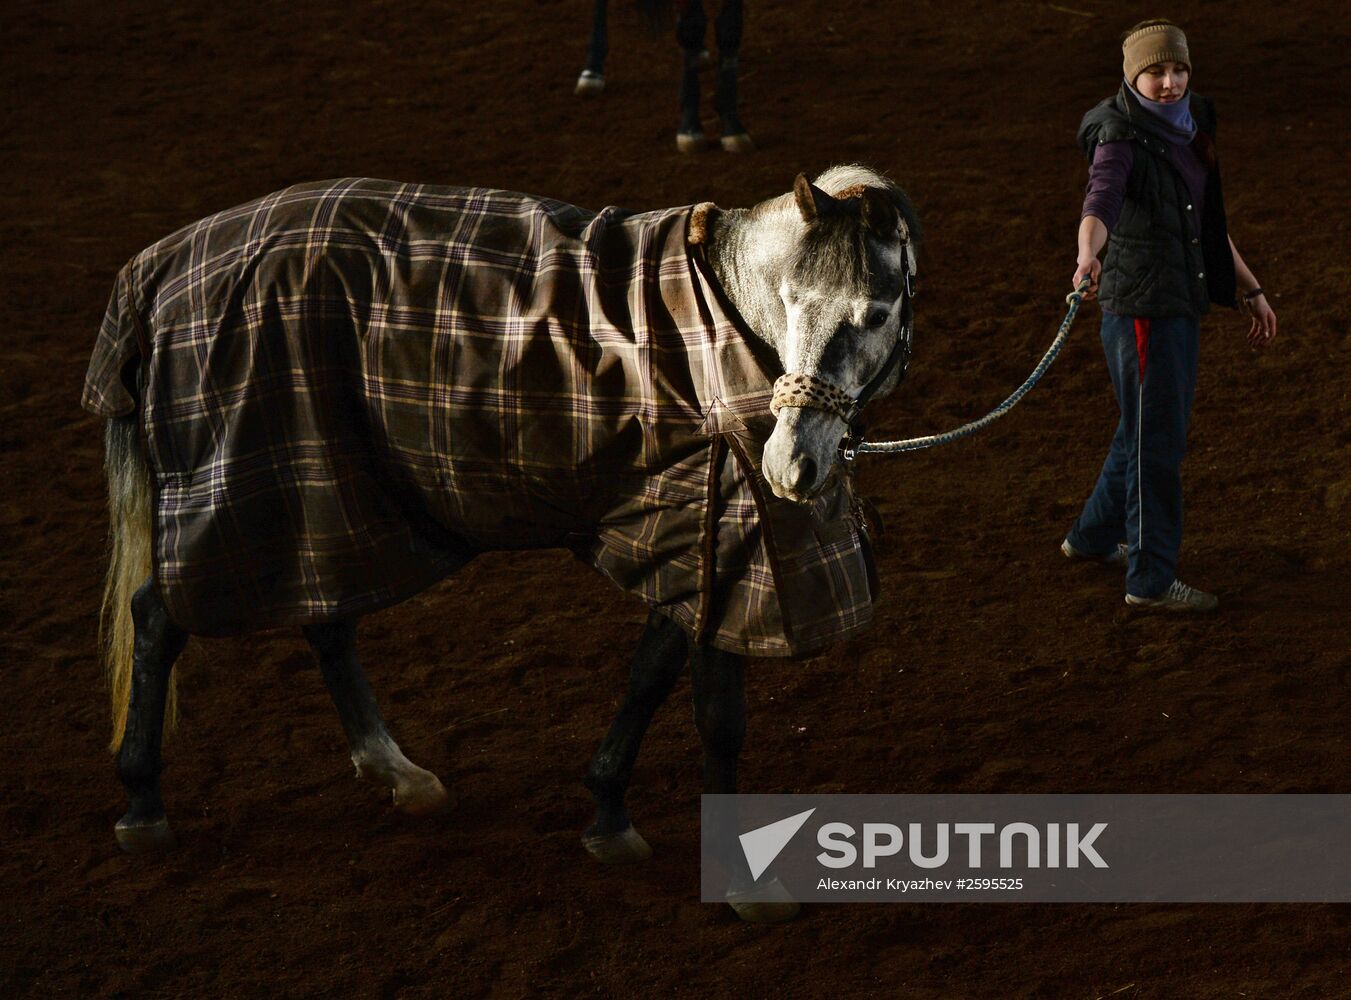 Equestrian training center in Novosibirsk